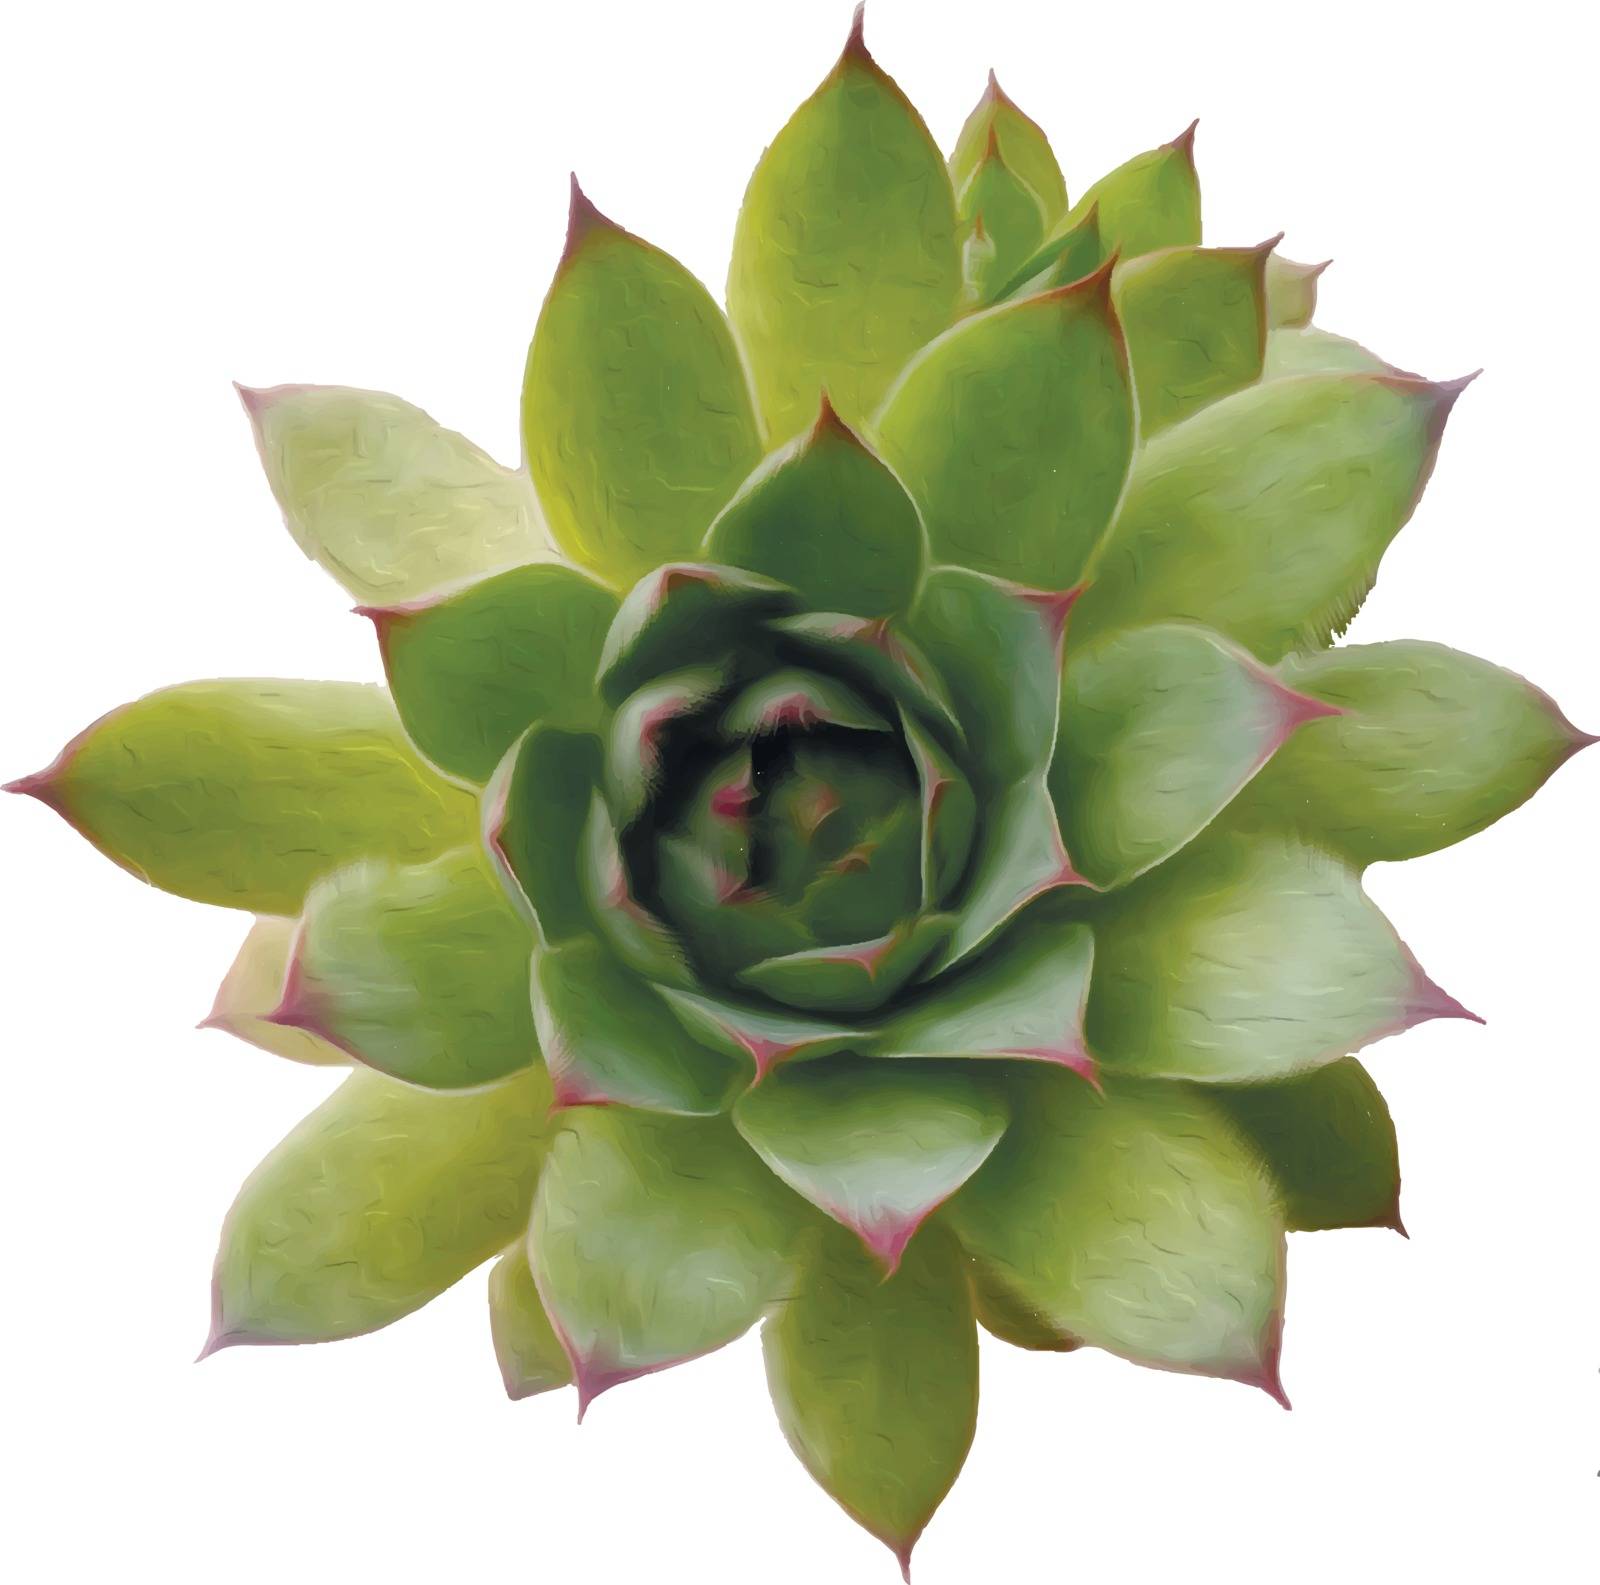 Echeveria, realistic vector illustration of a succulent plant. Top view